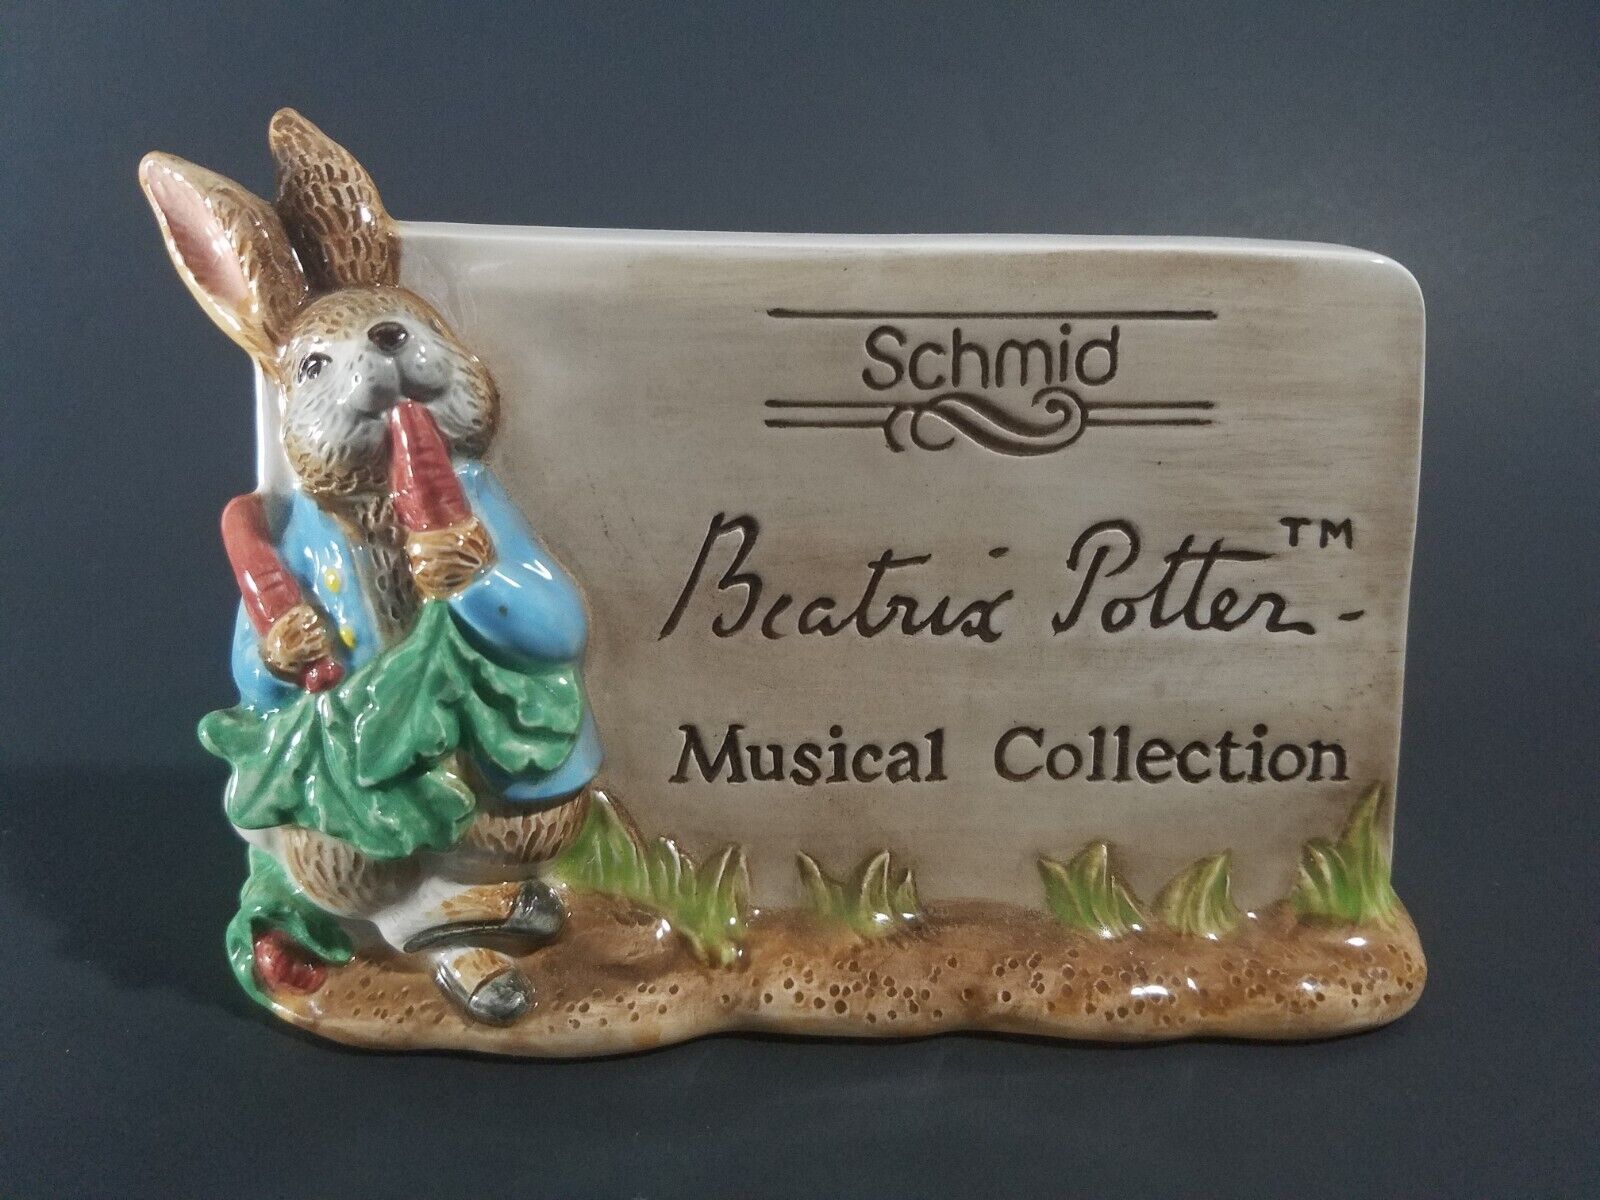 Schmid Beatrix Potter Figurine Musical Collection Dealer Advertising Sign